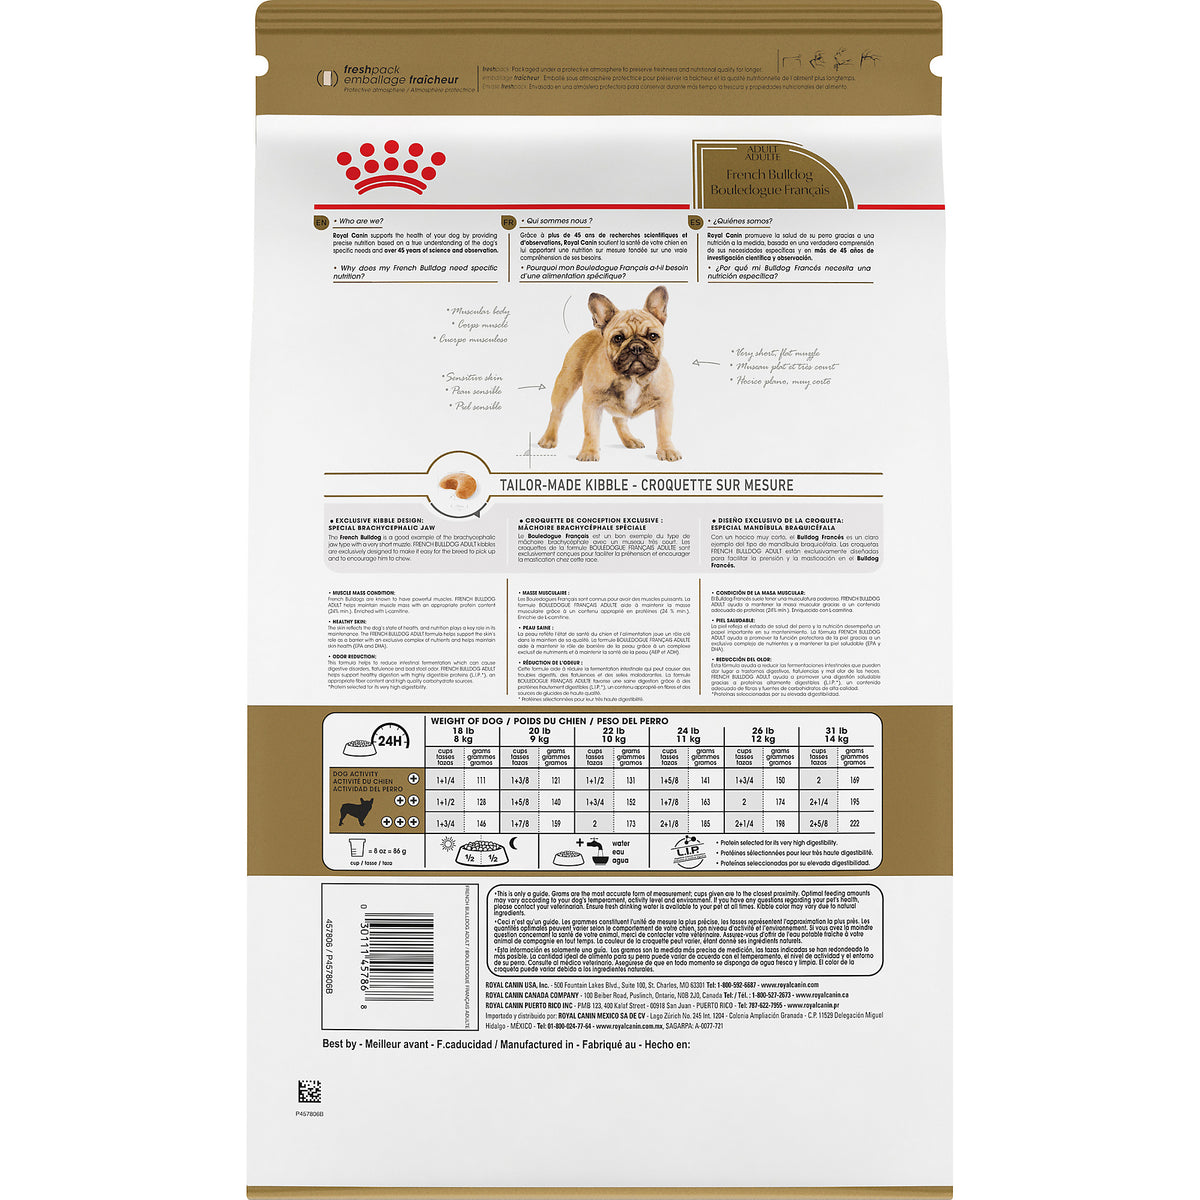 Royal Canin Adult French Bulldog Food (6lbs)